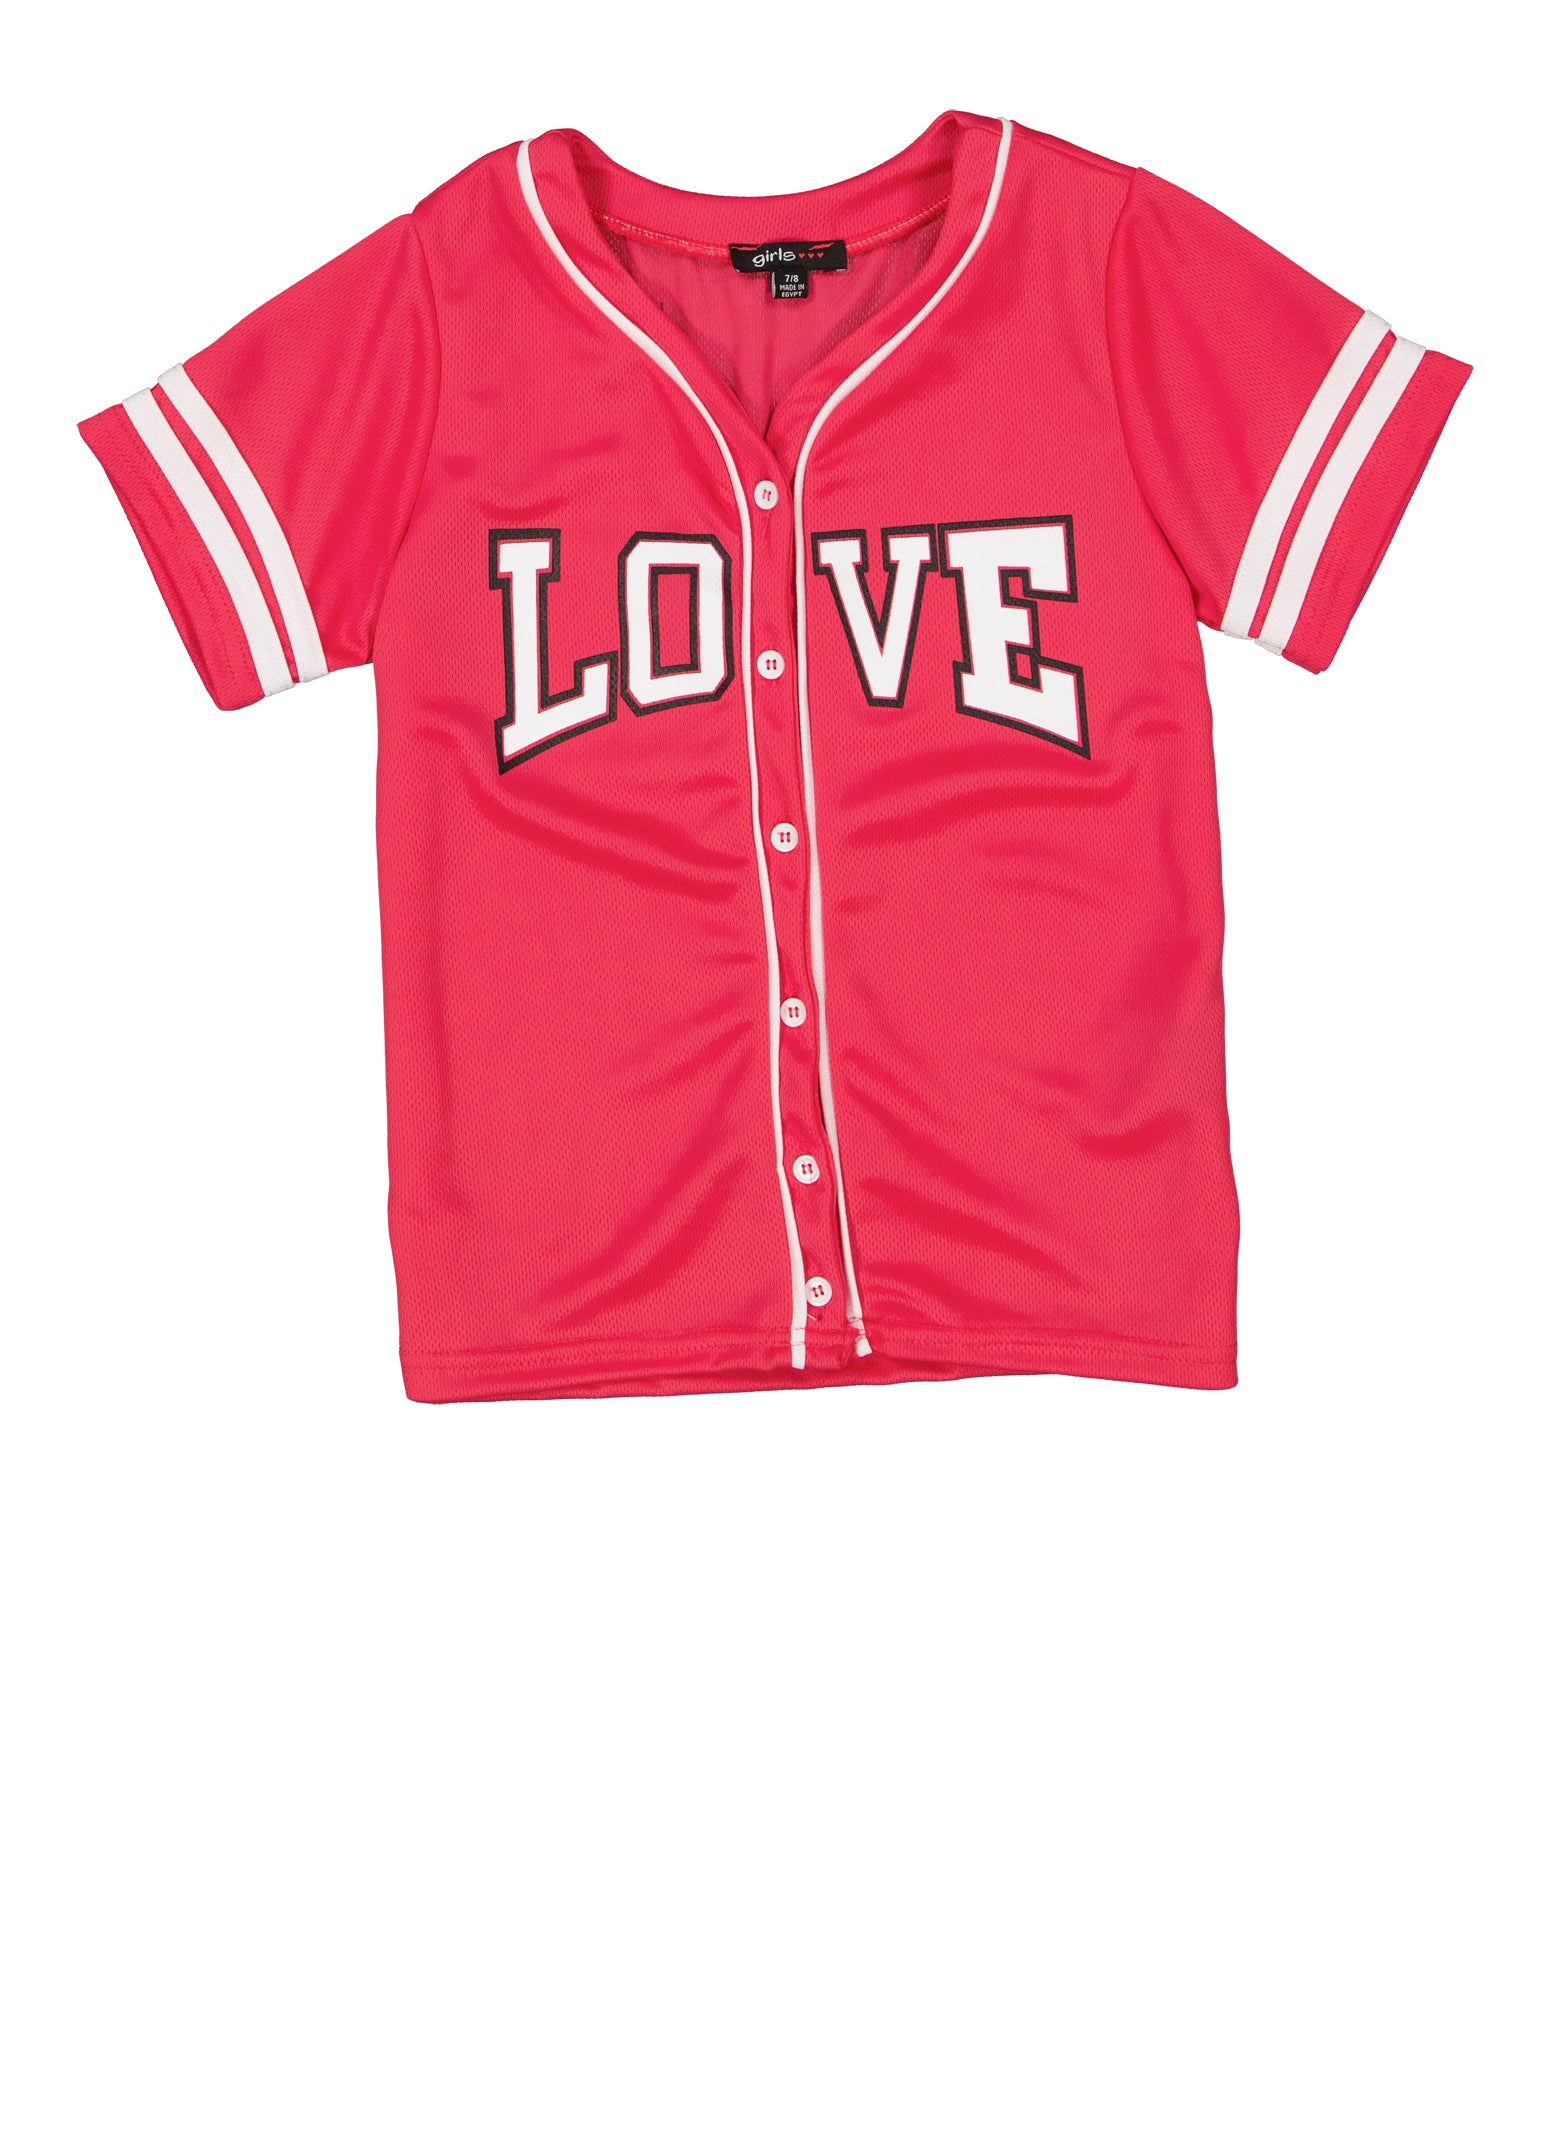 Girls Mesh Love Baseball Jersey - Pink